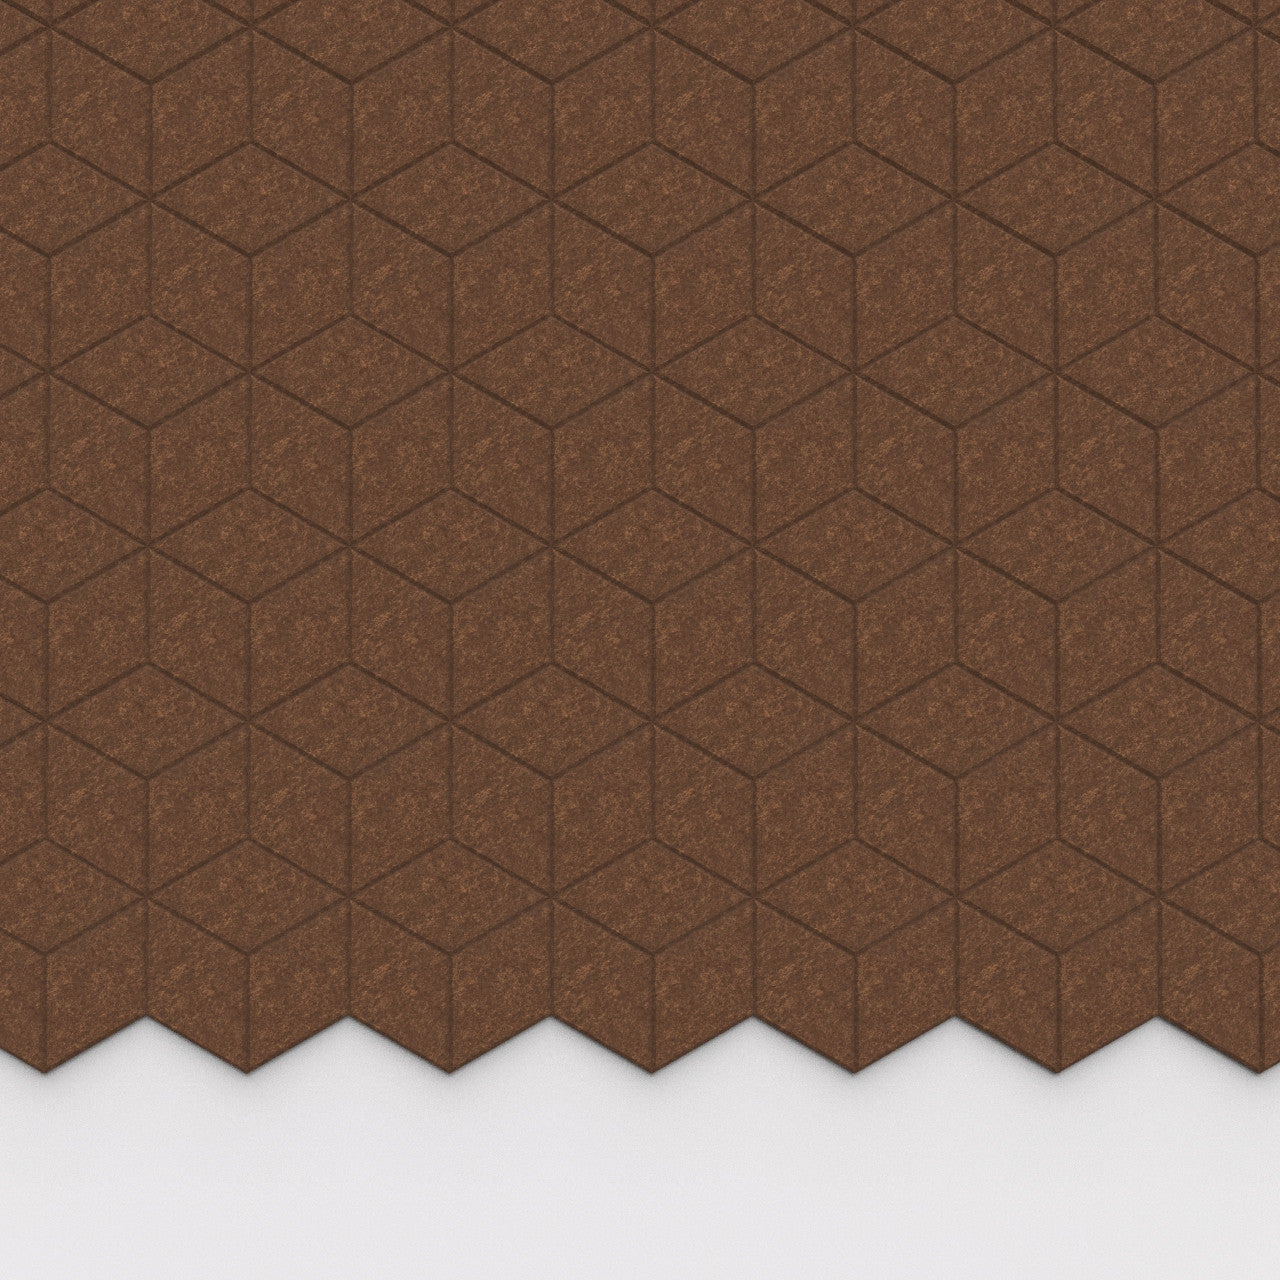 100% Recycled PET Felt Hexagon Diamond Small Acoustic Tile Coconut | Plastock